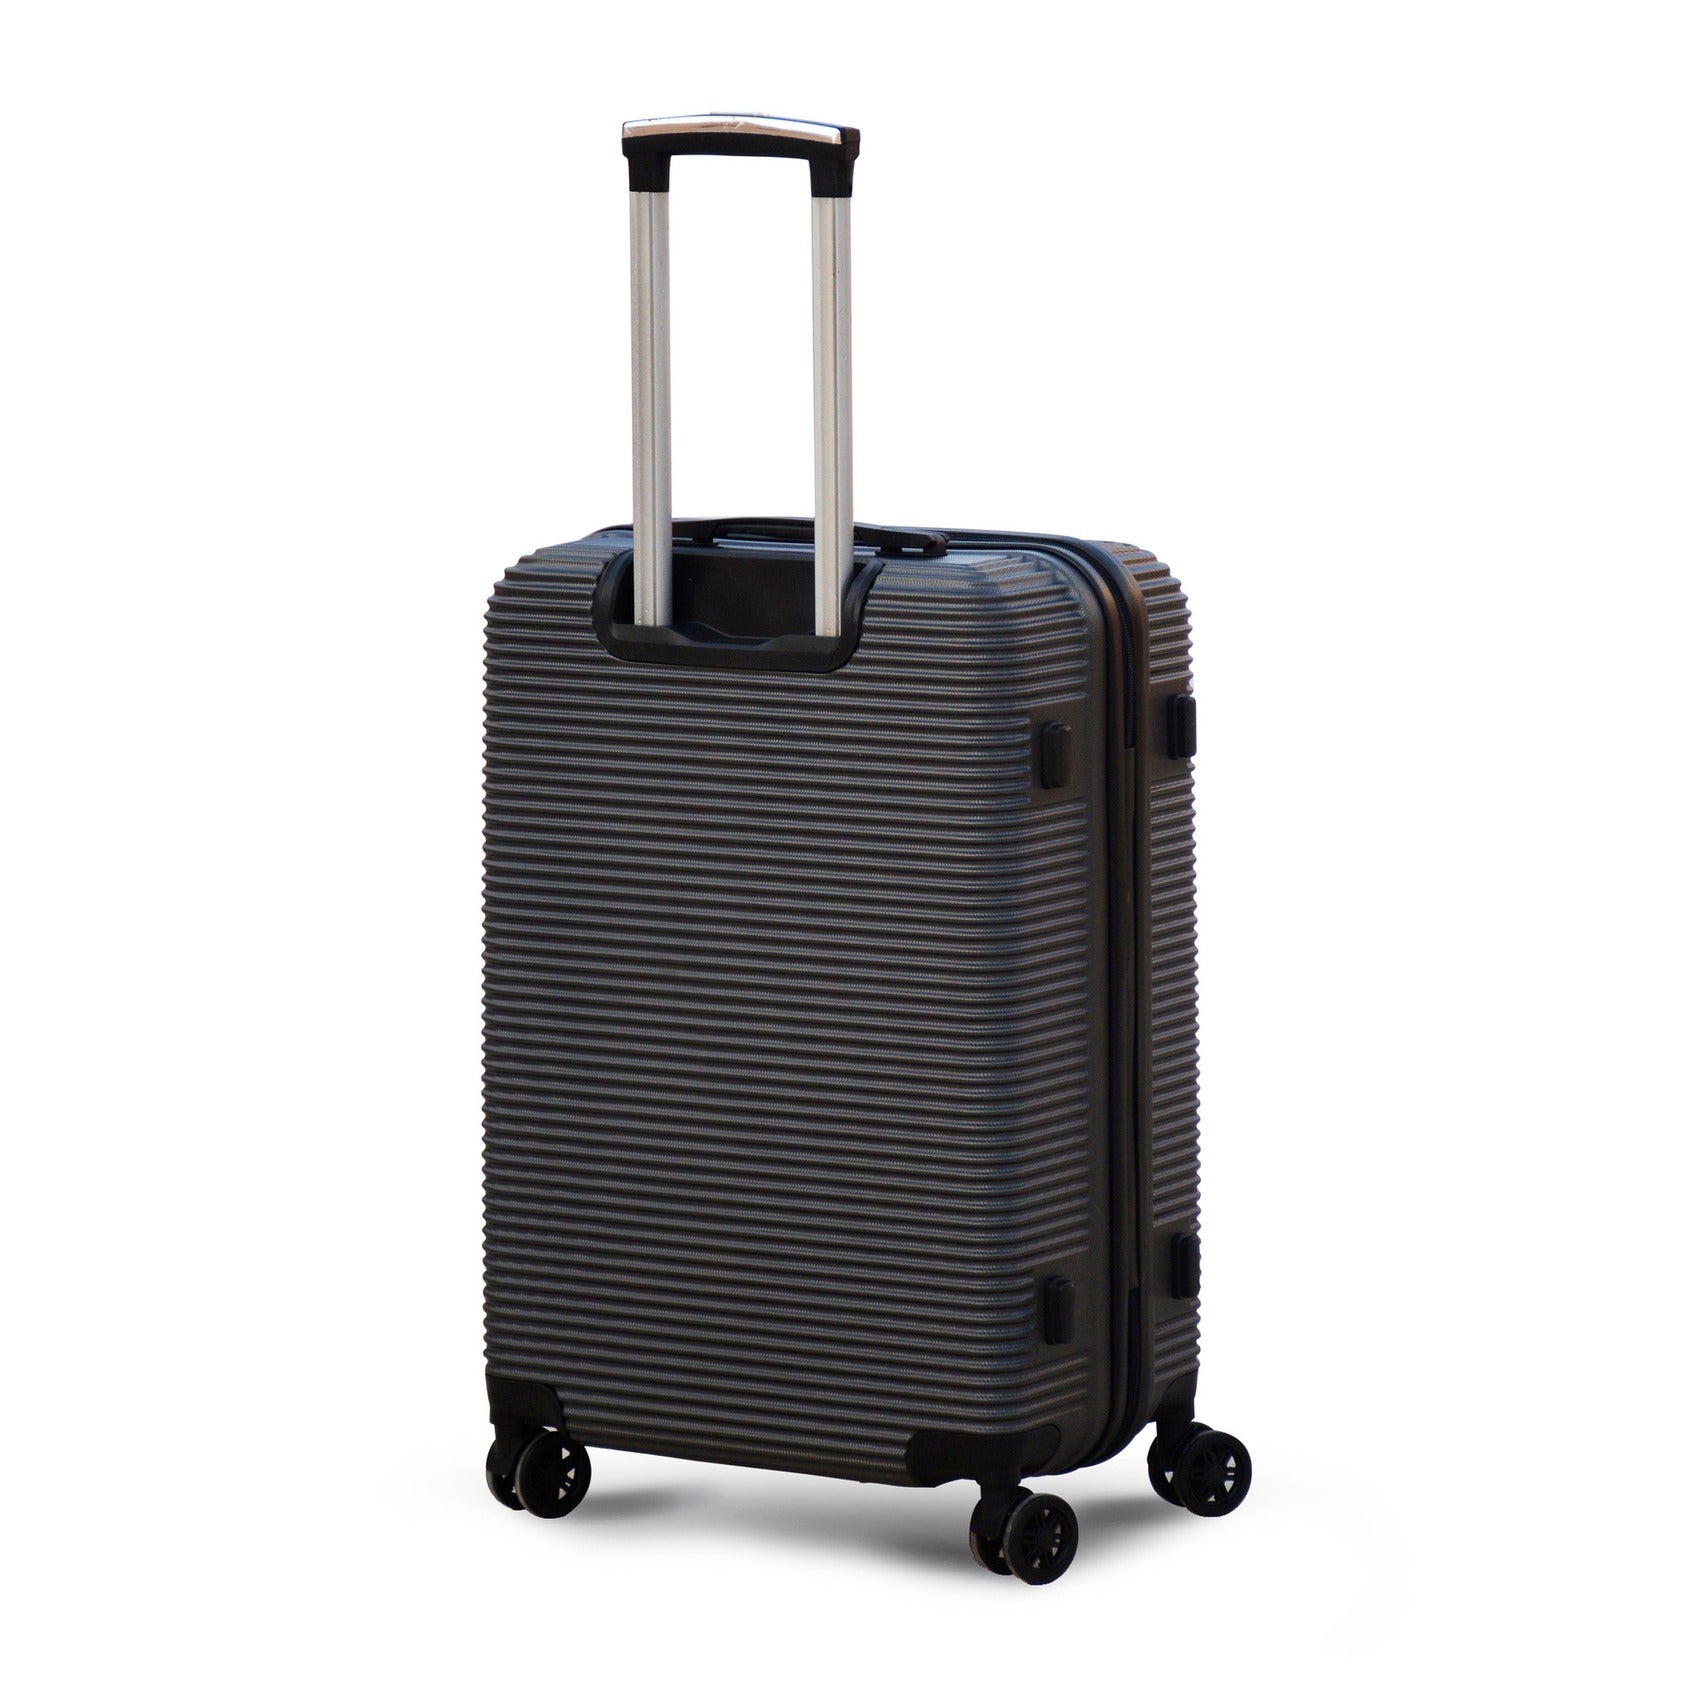 28" Dark Grey Colour JIAN ABS Line Luggage Lightweight Hard Case Trolley Bag With Spinner Wheel Zaappy.com